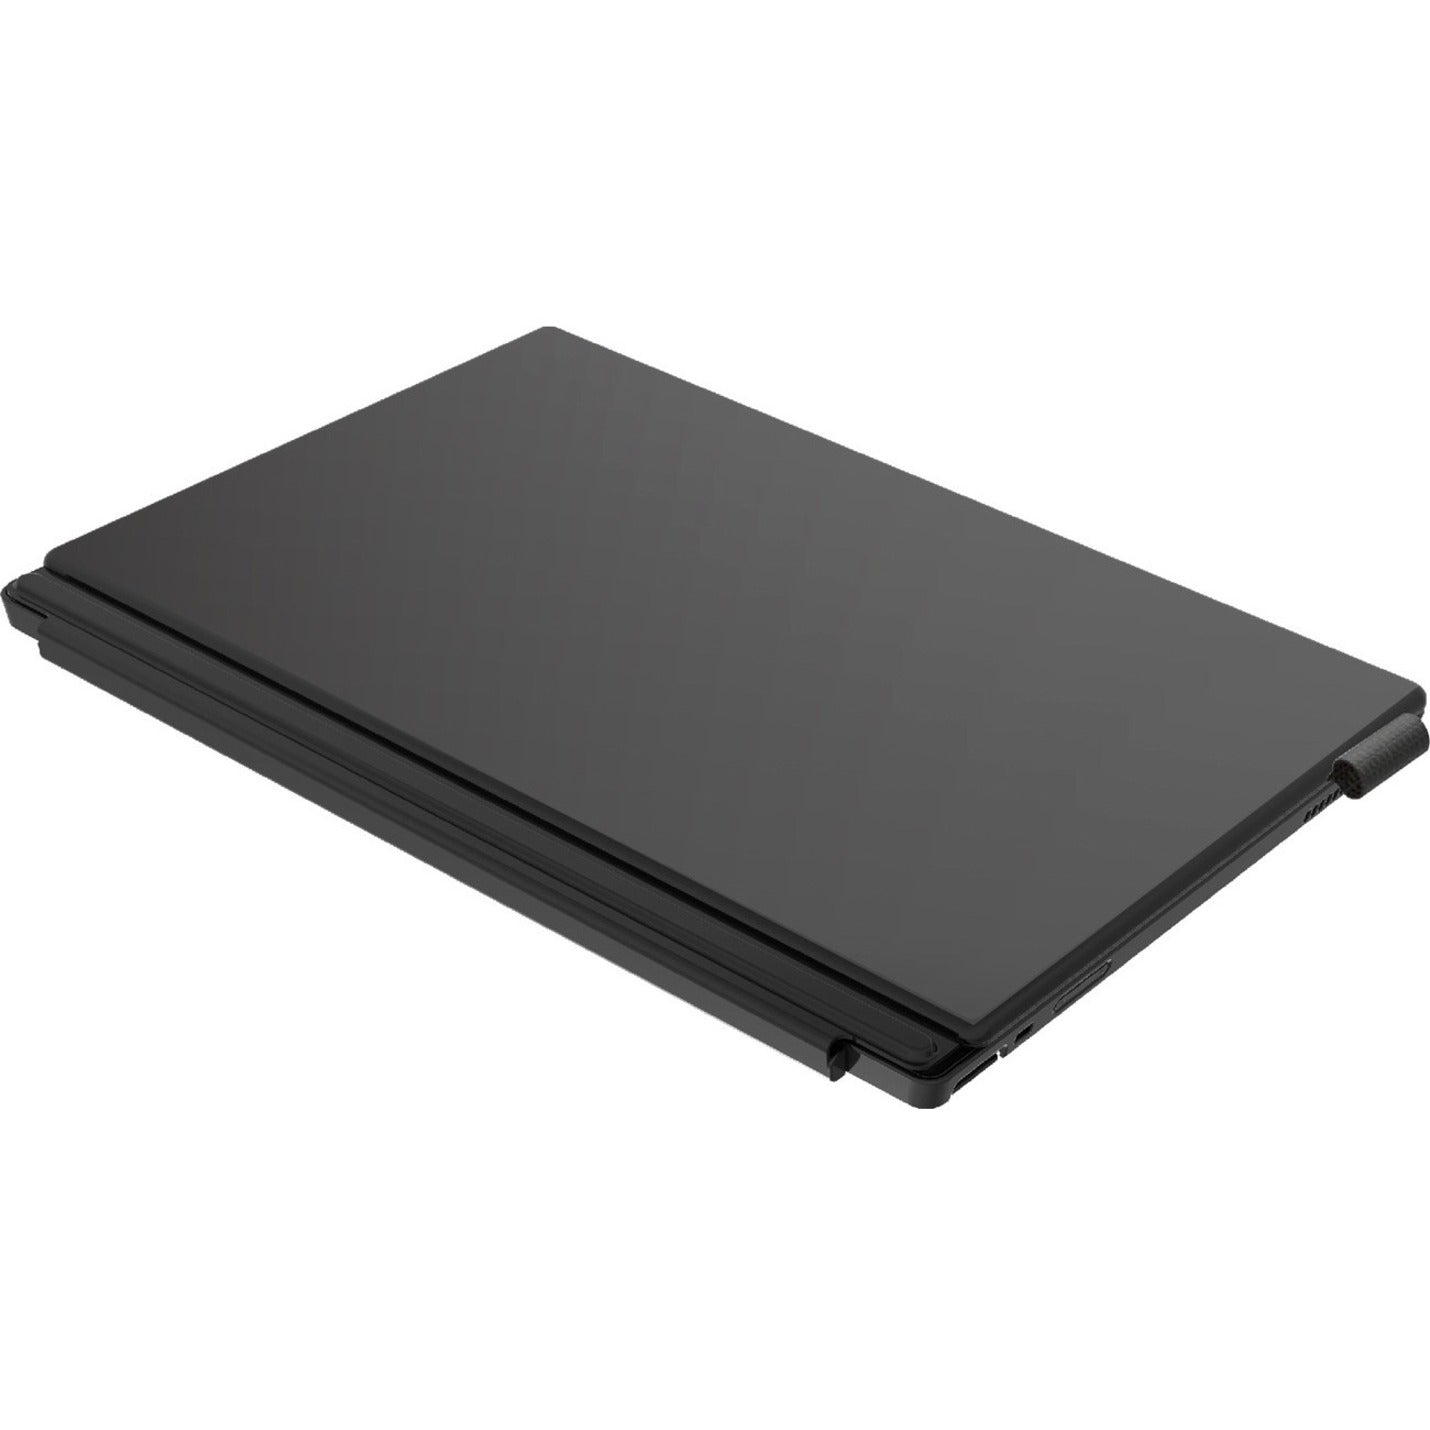 Lenovo 20UW000LUS ThinkPad X12 Detachable Gen 1 2 in 1 Notebook, Core i7, 16GB RAM, 512GB SSD, Windows 10 Pro